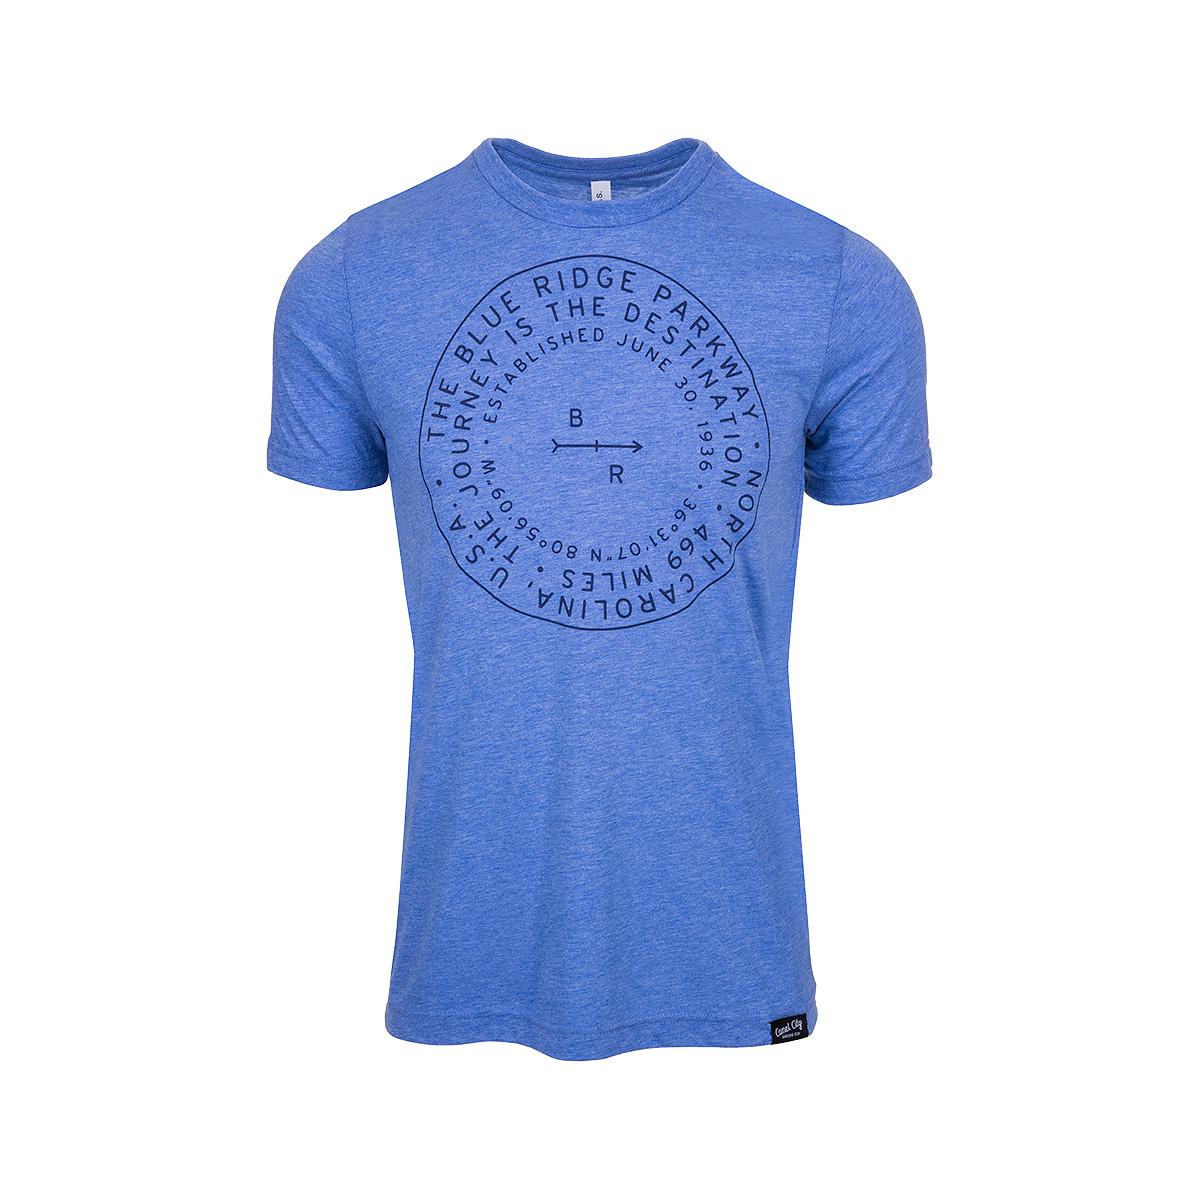  Blue Ridge Parkway Benchmark T- Shirt